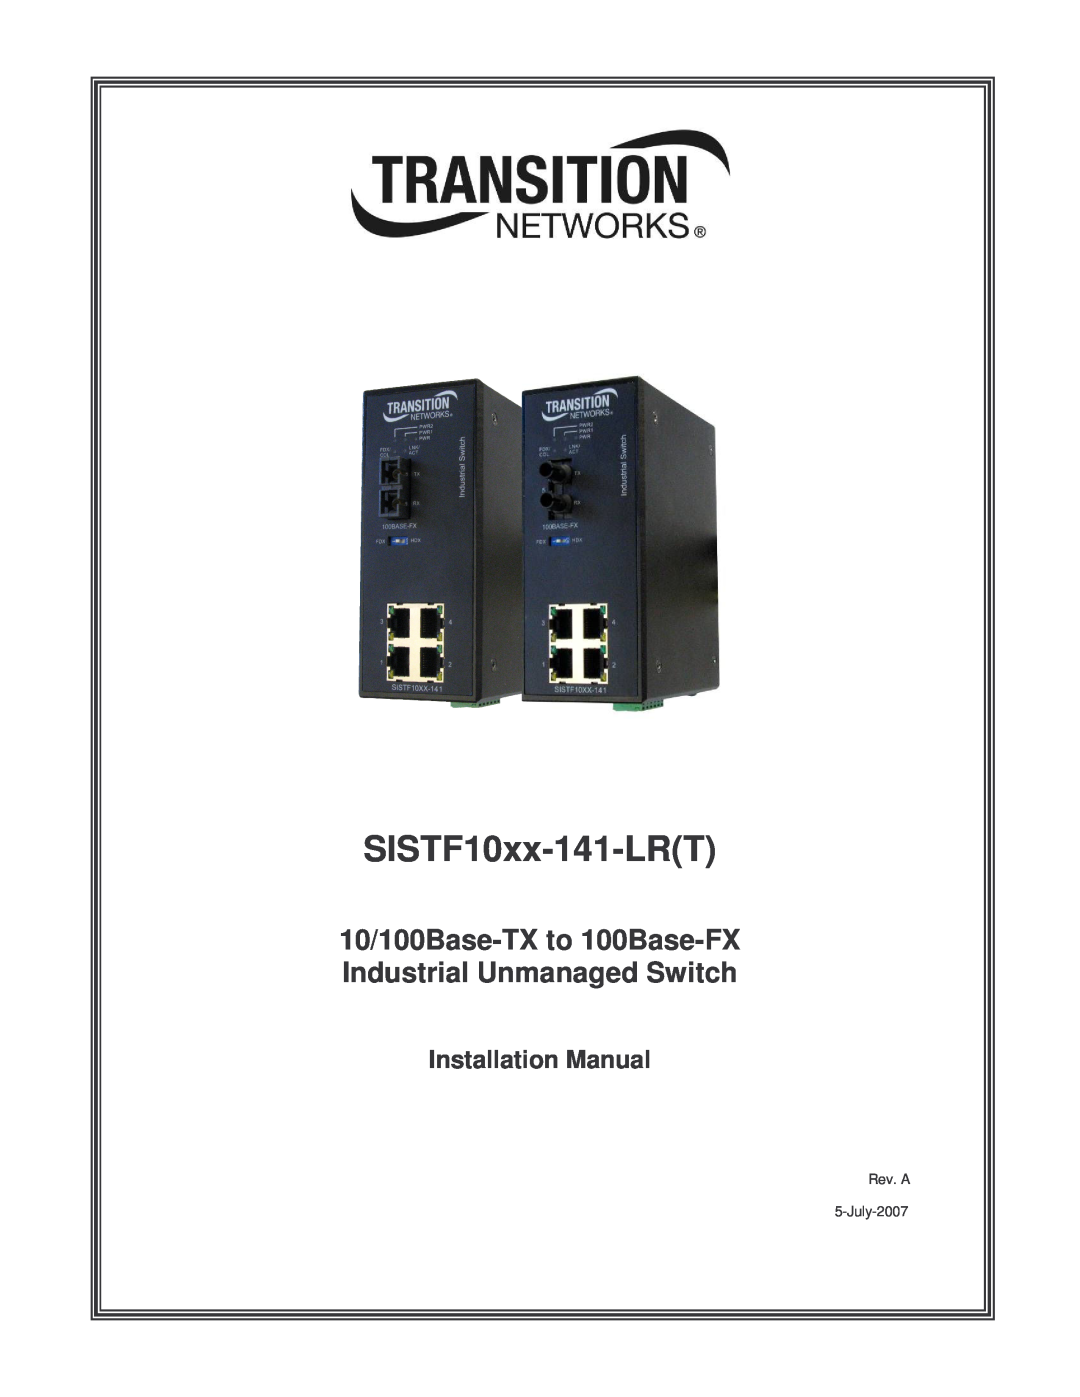 Transition Networks SISTF10xx-141-LR(T) installation manual Installation Manual, SISTF10xx-141-LRT, Rev. A 5-July-2007 